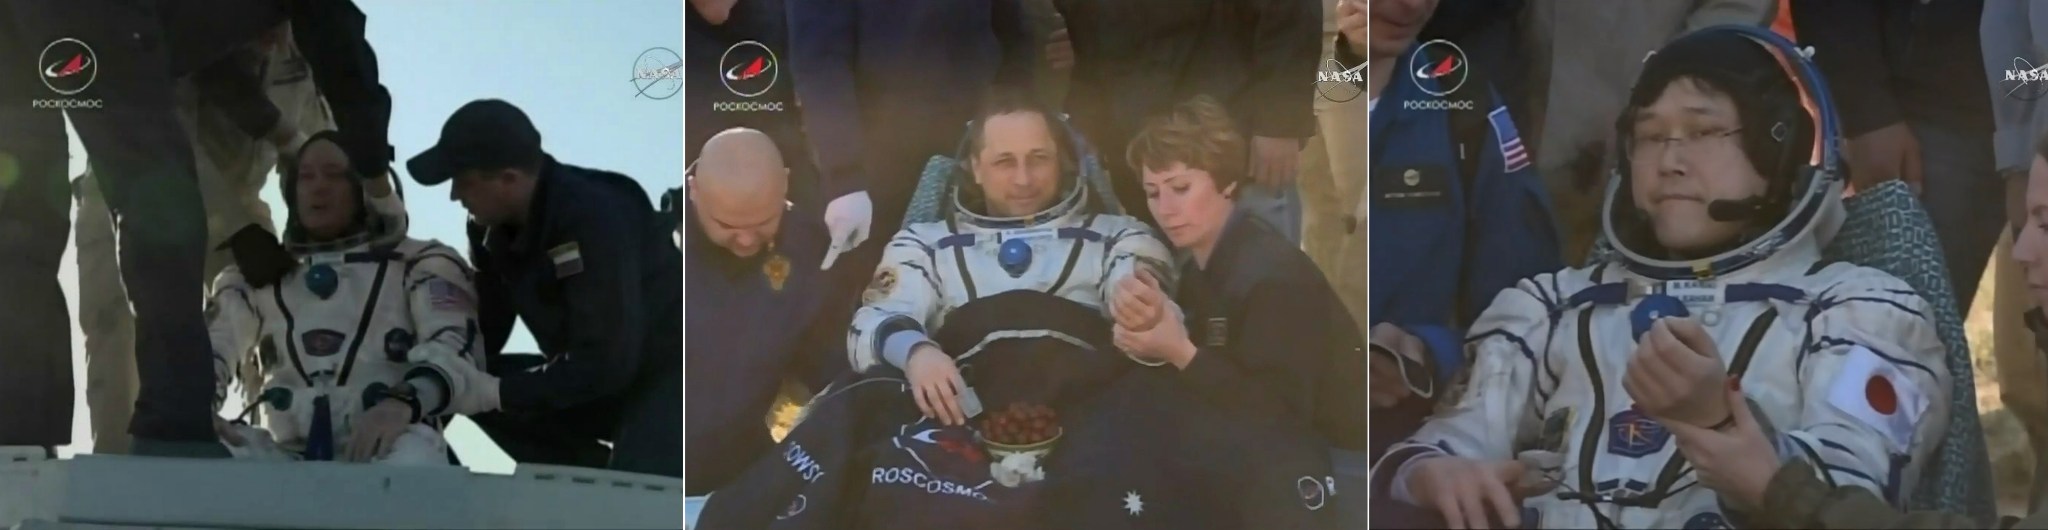 NASA astronaut Scott Tingle, cosmonaut Anton Shkaplerov of Roscosmos and JAXA astronaut Norishige Kanai